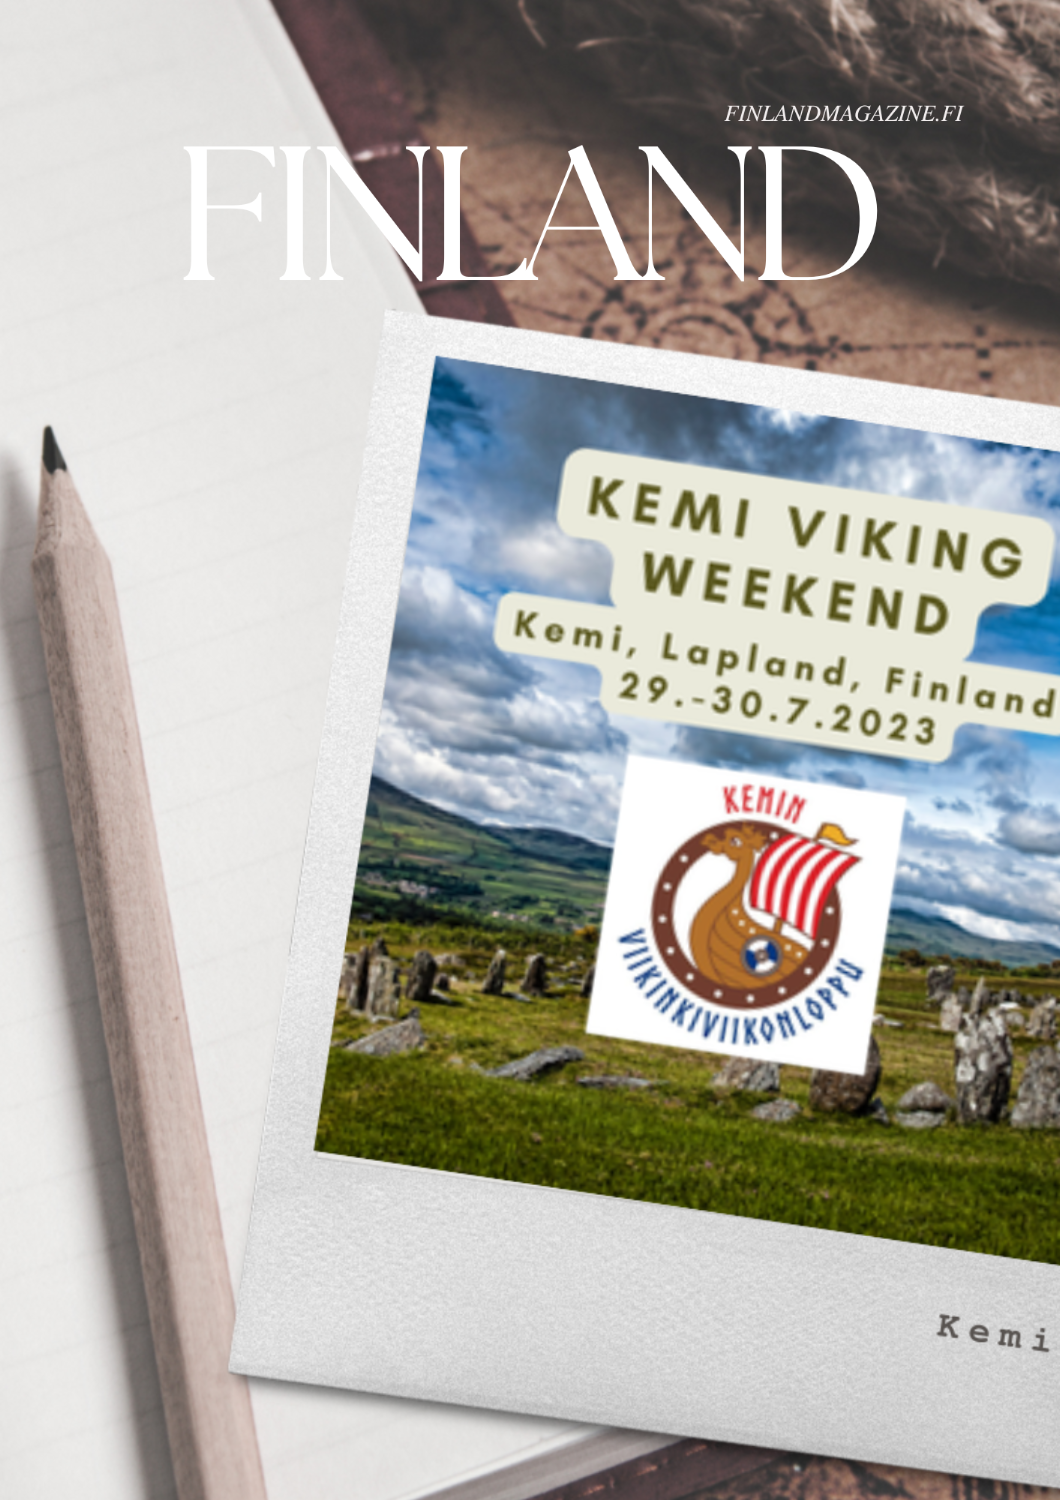 Viking Weekend in Kemi, Lapland, Finland 29.-30. July